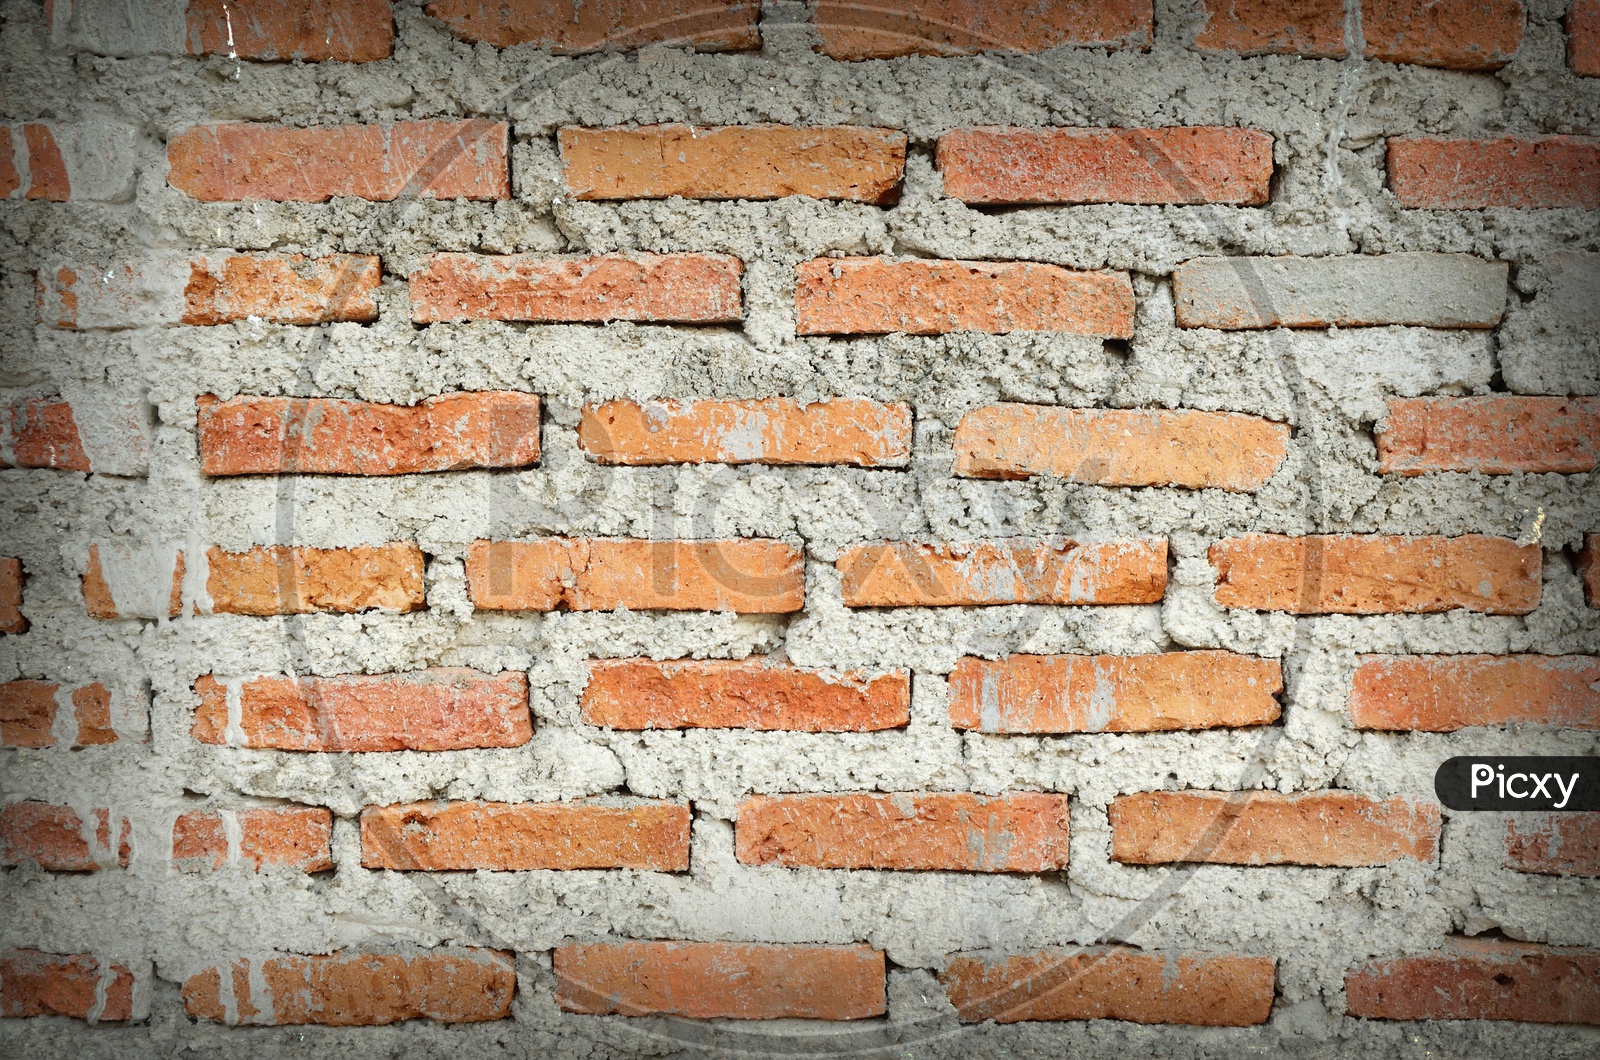 Brick Wall Texture Background